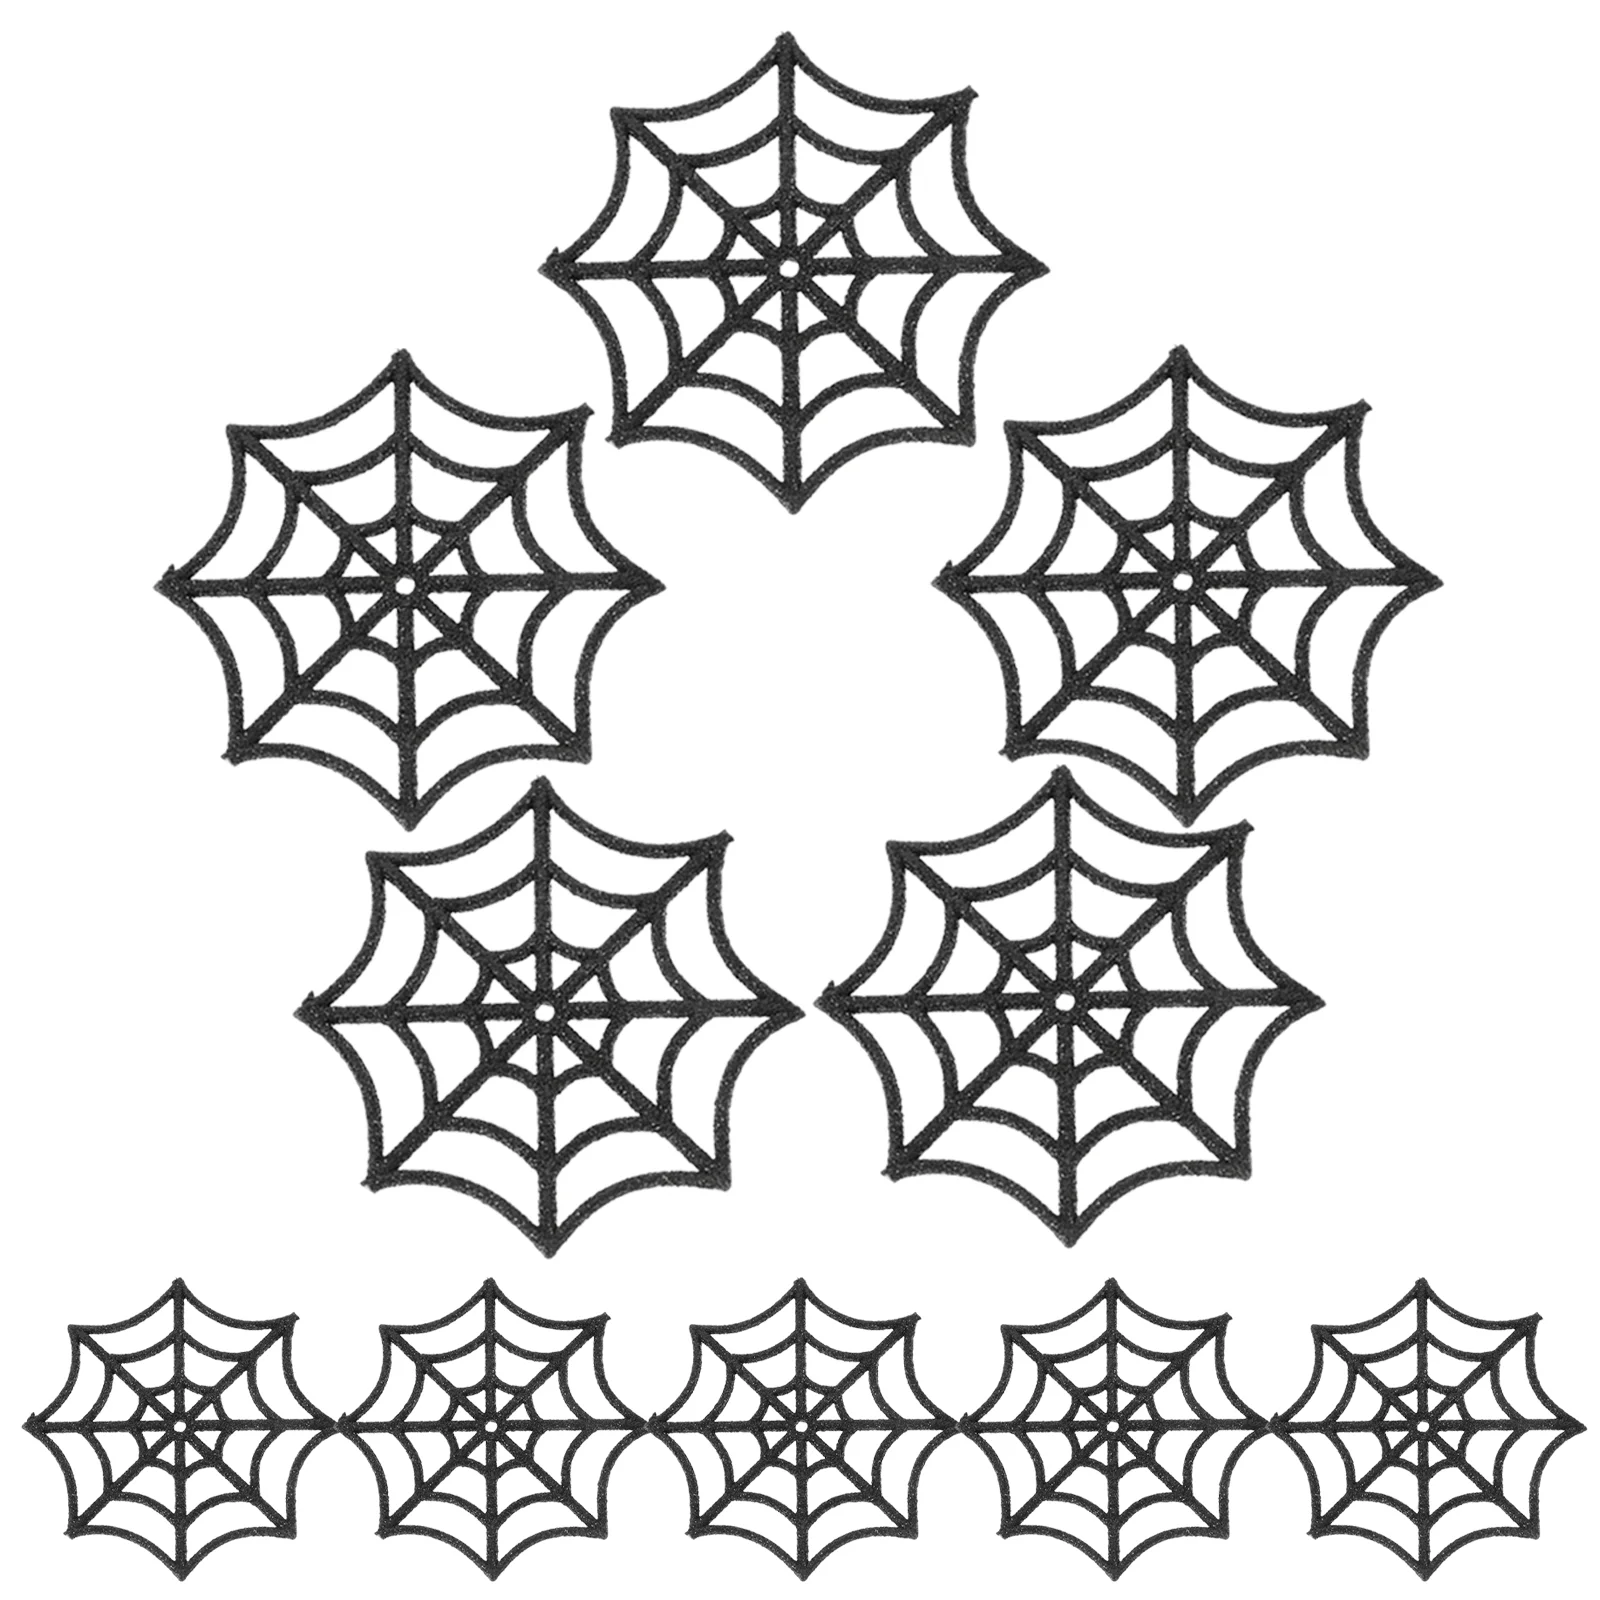 

10 Pcs Outdoor Halloween Decorations Party Layout Props Spider Web Indoor Plastic Cobweb Ornaments